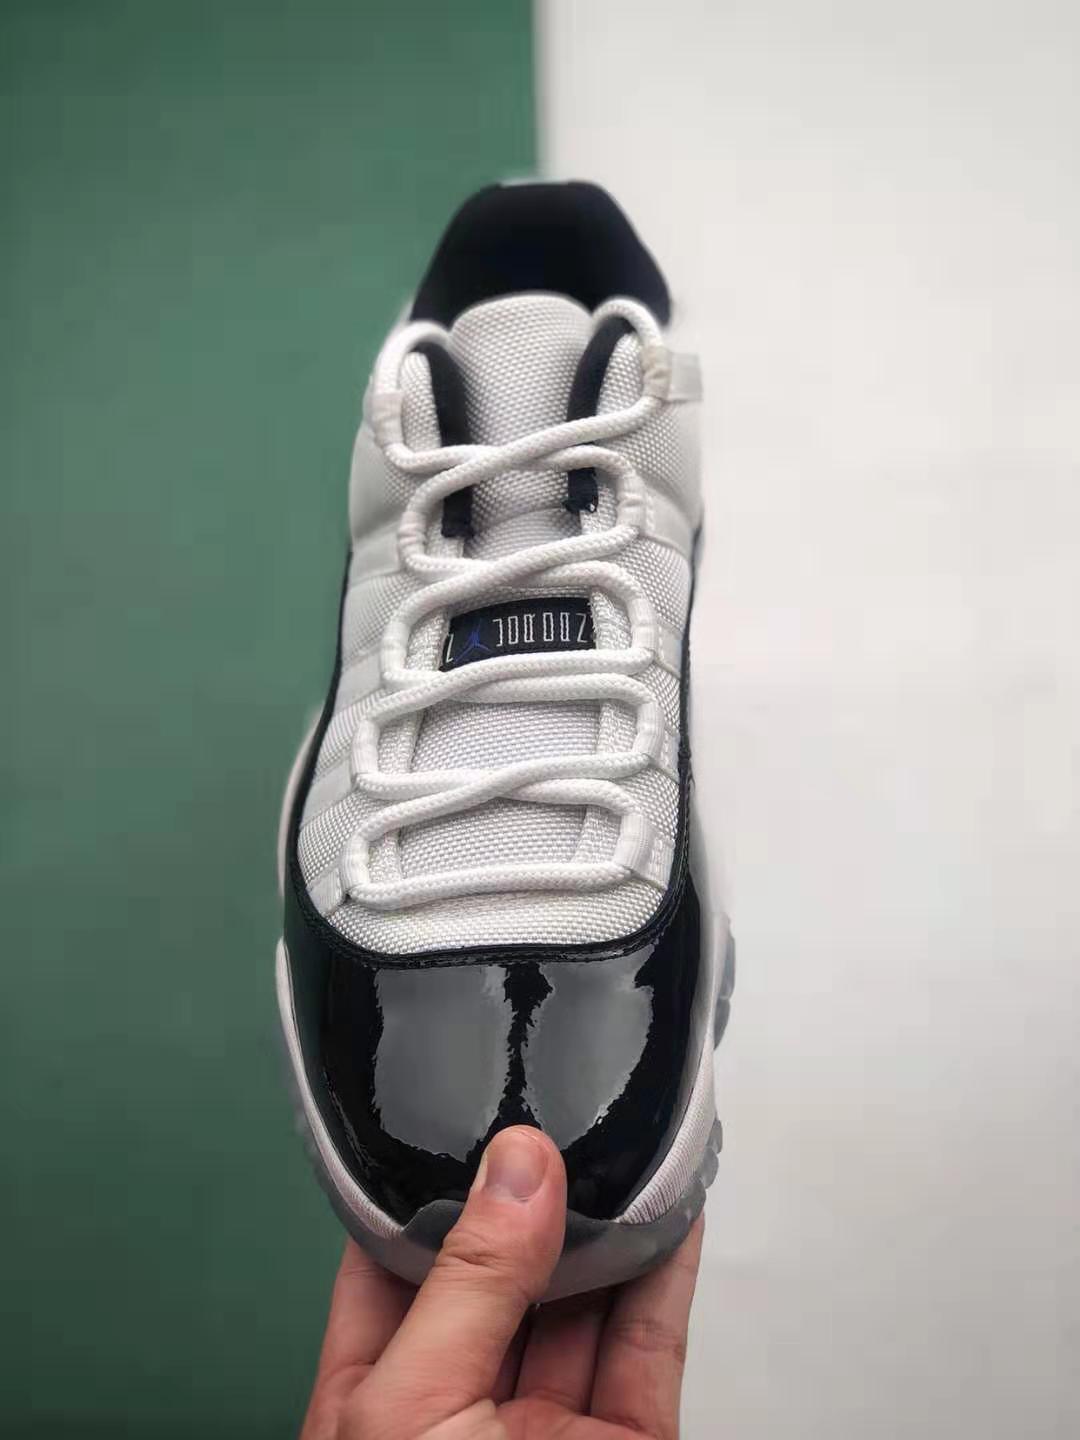 Air Jordan 11 Retro Low Concord 528895-153 - Shop Authentic Retro Sneakers